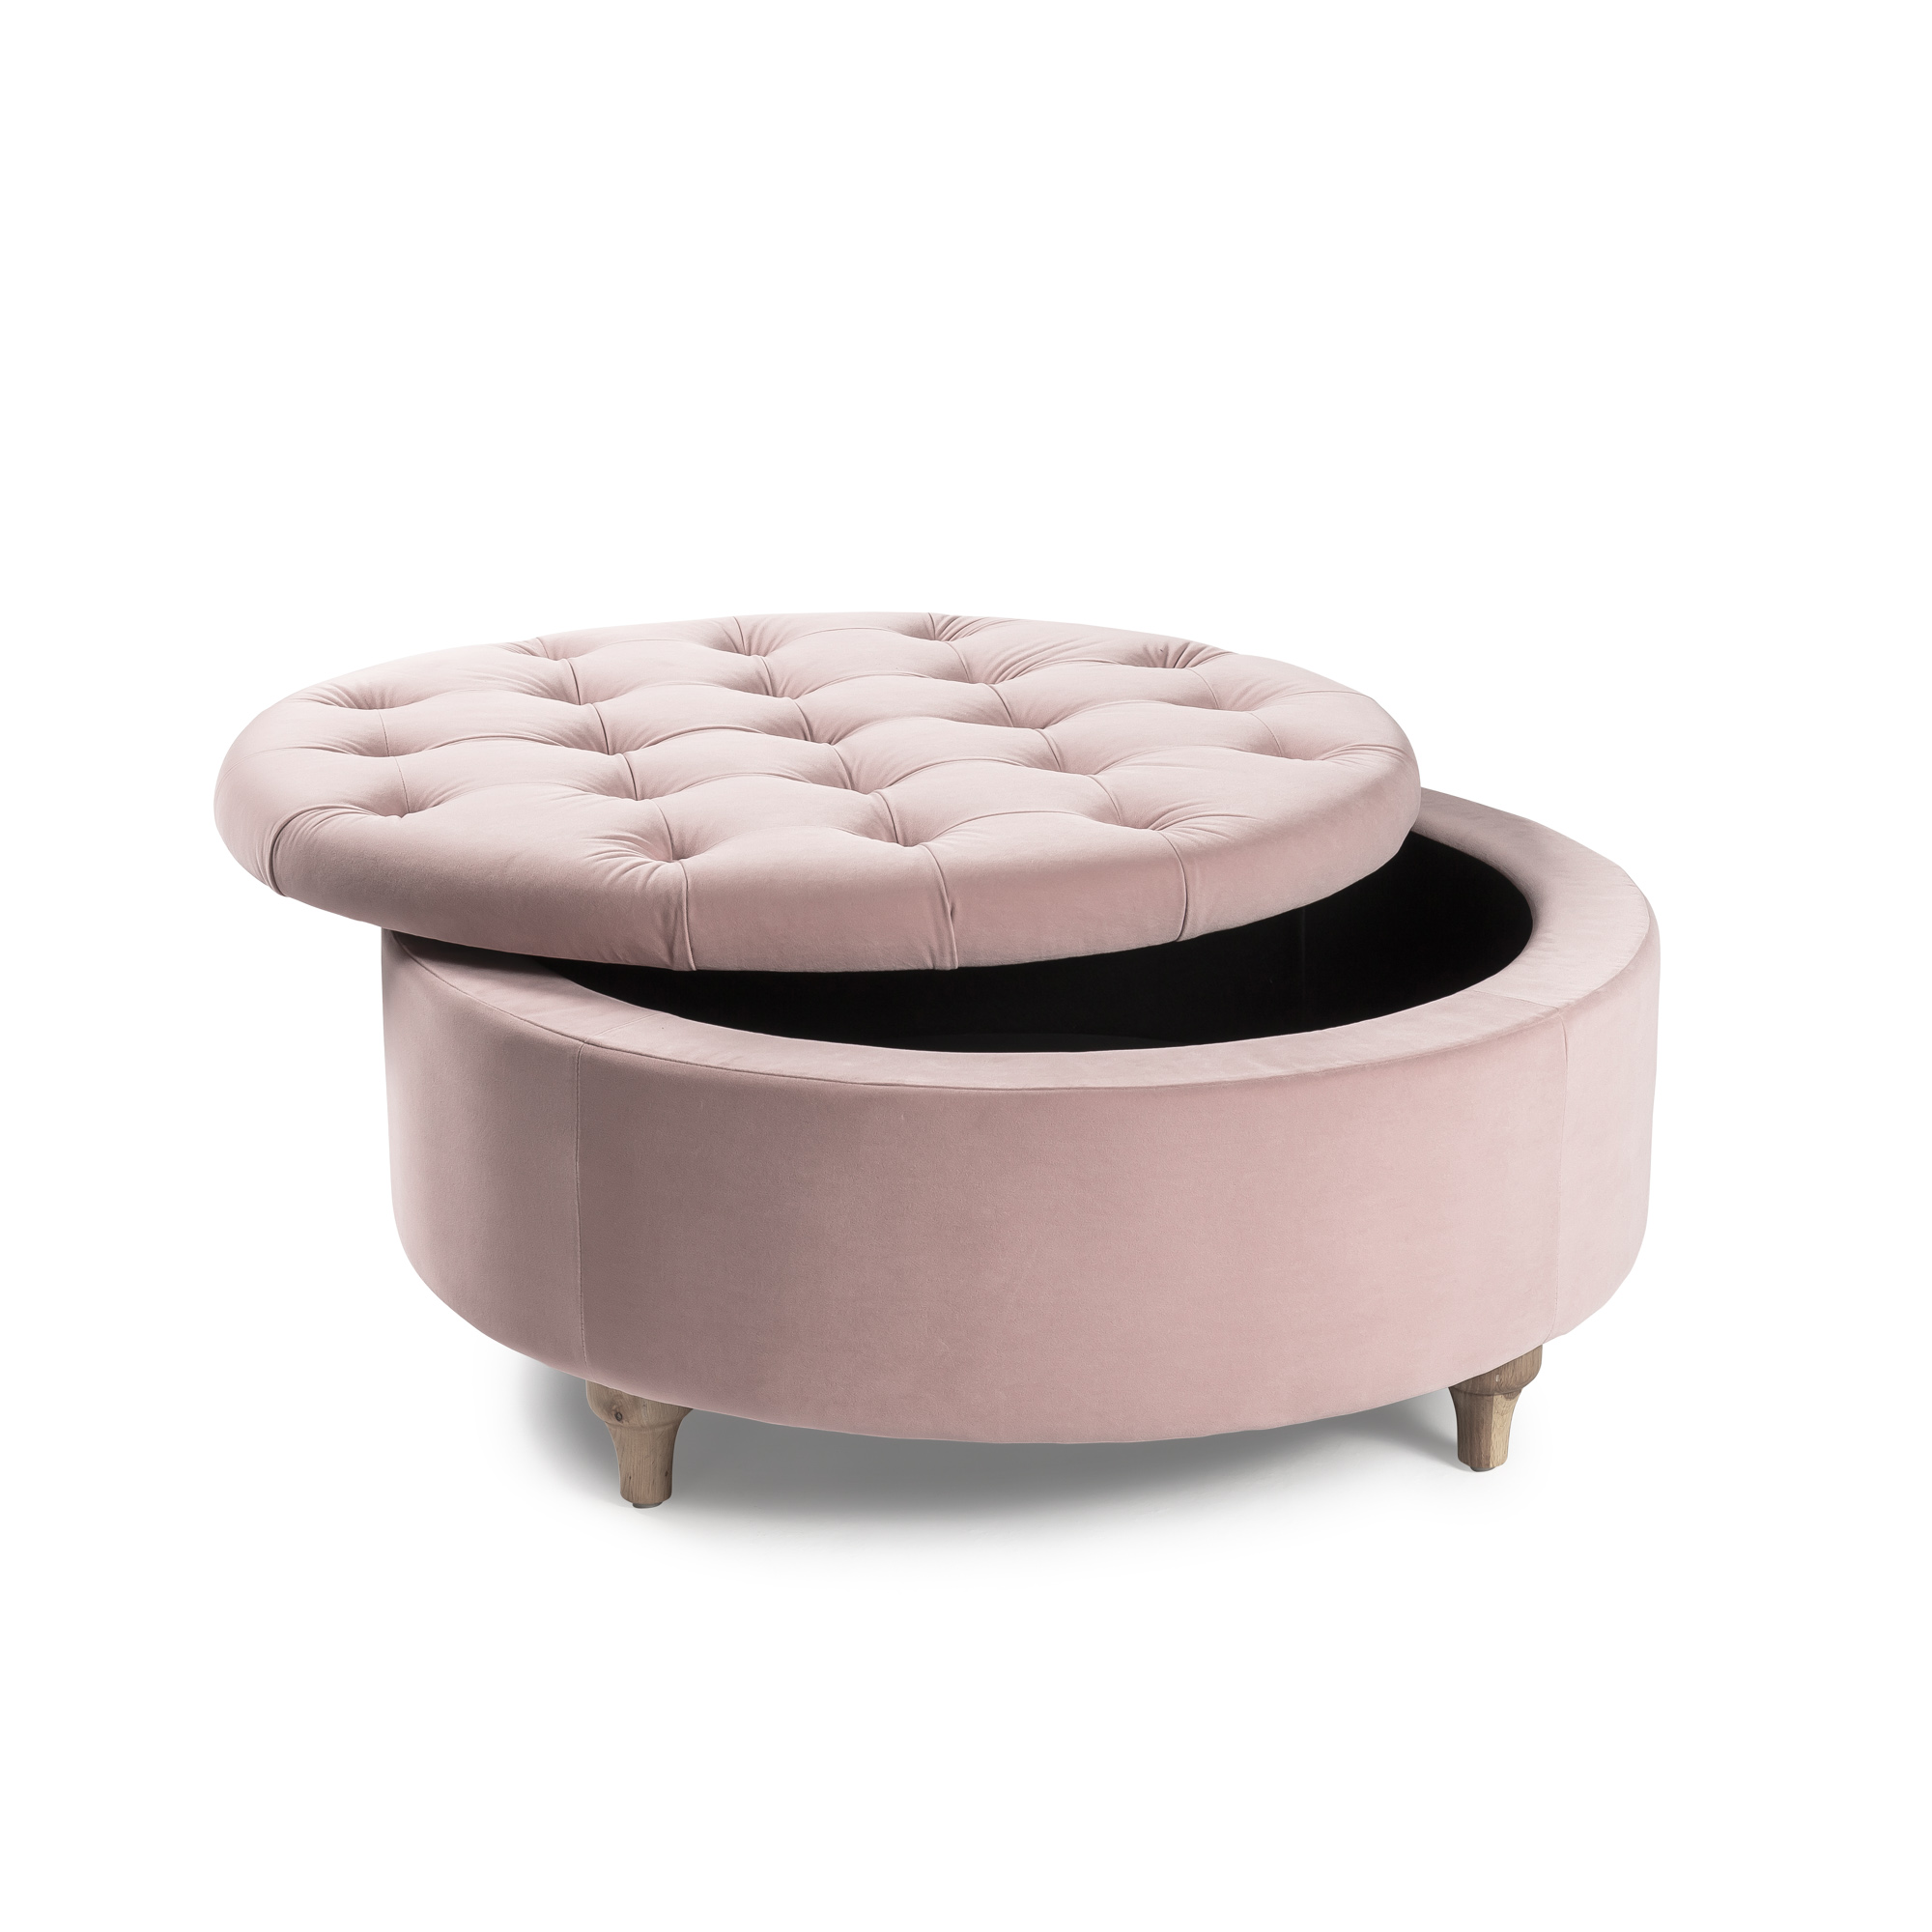 Blush pink storage ottoman storage bench foot stool with storage